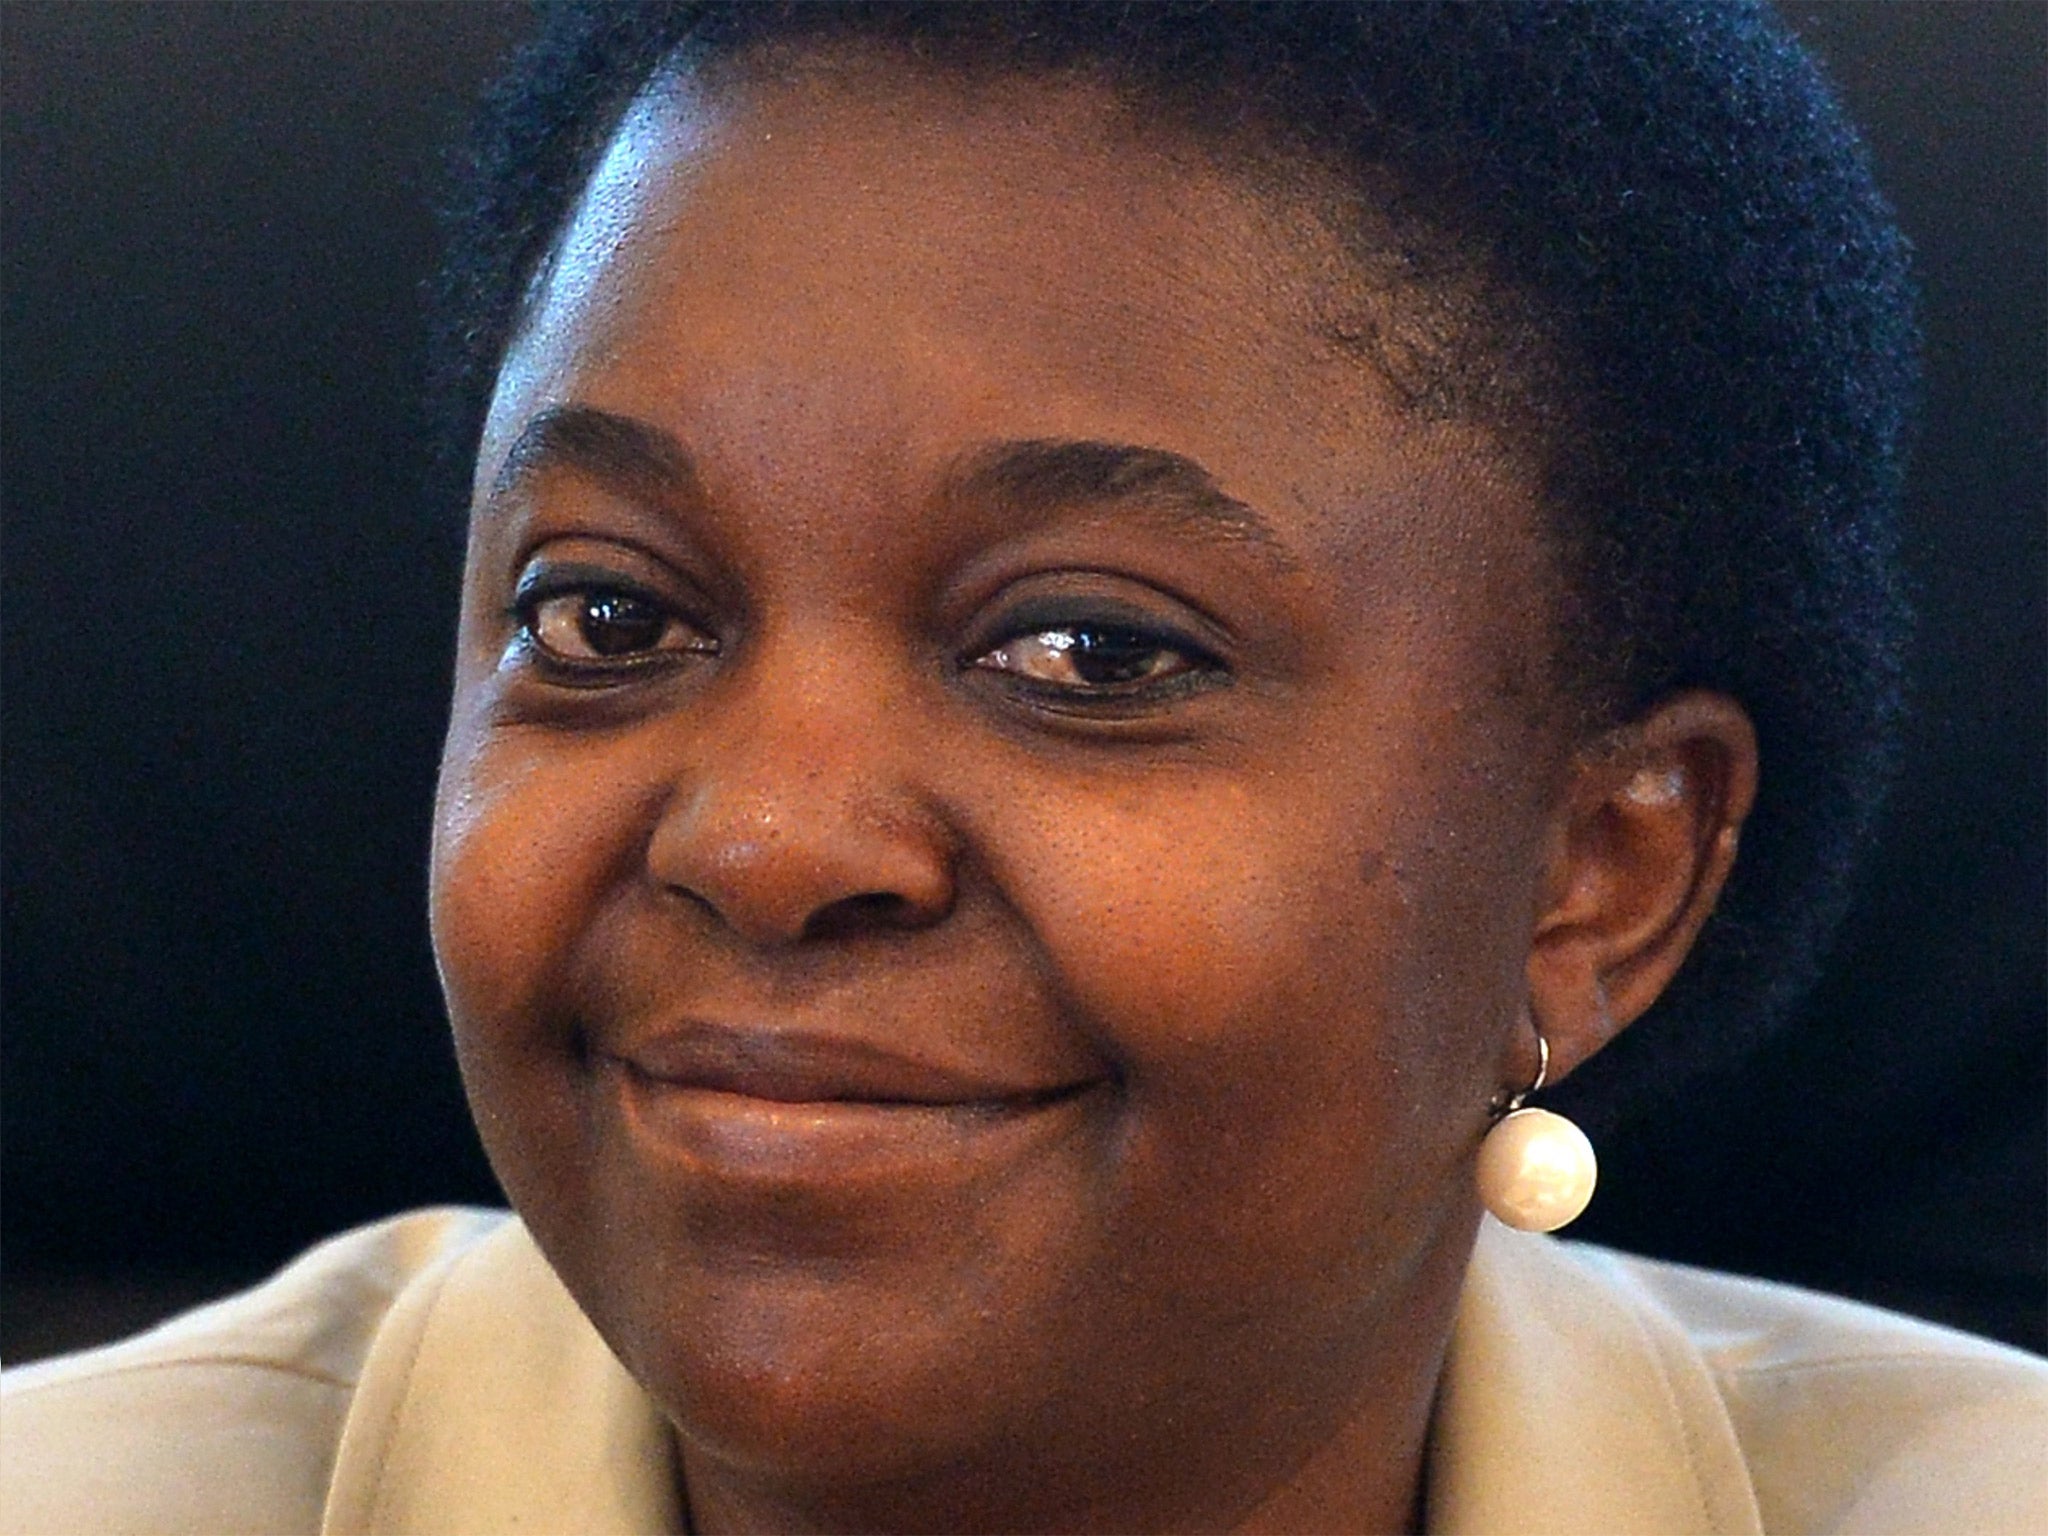 Cécile Kyenge was described as an 'orangutan' by one far-right politician